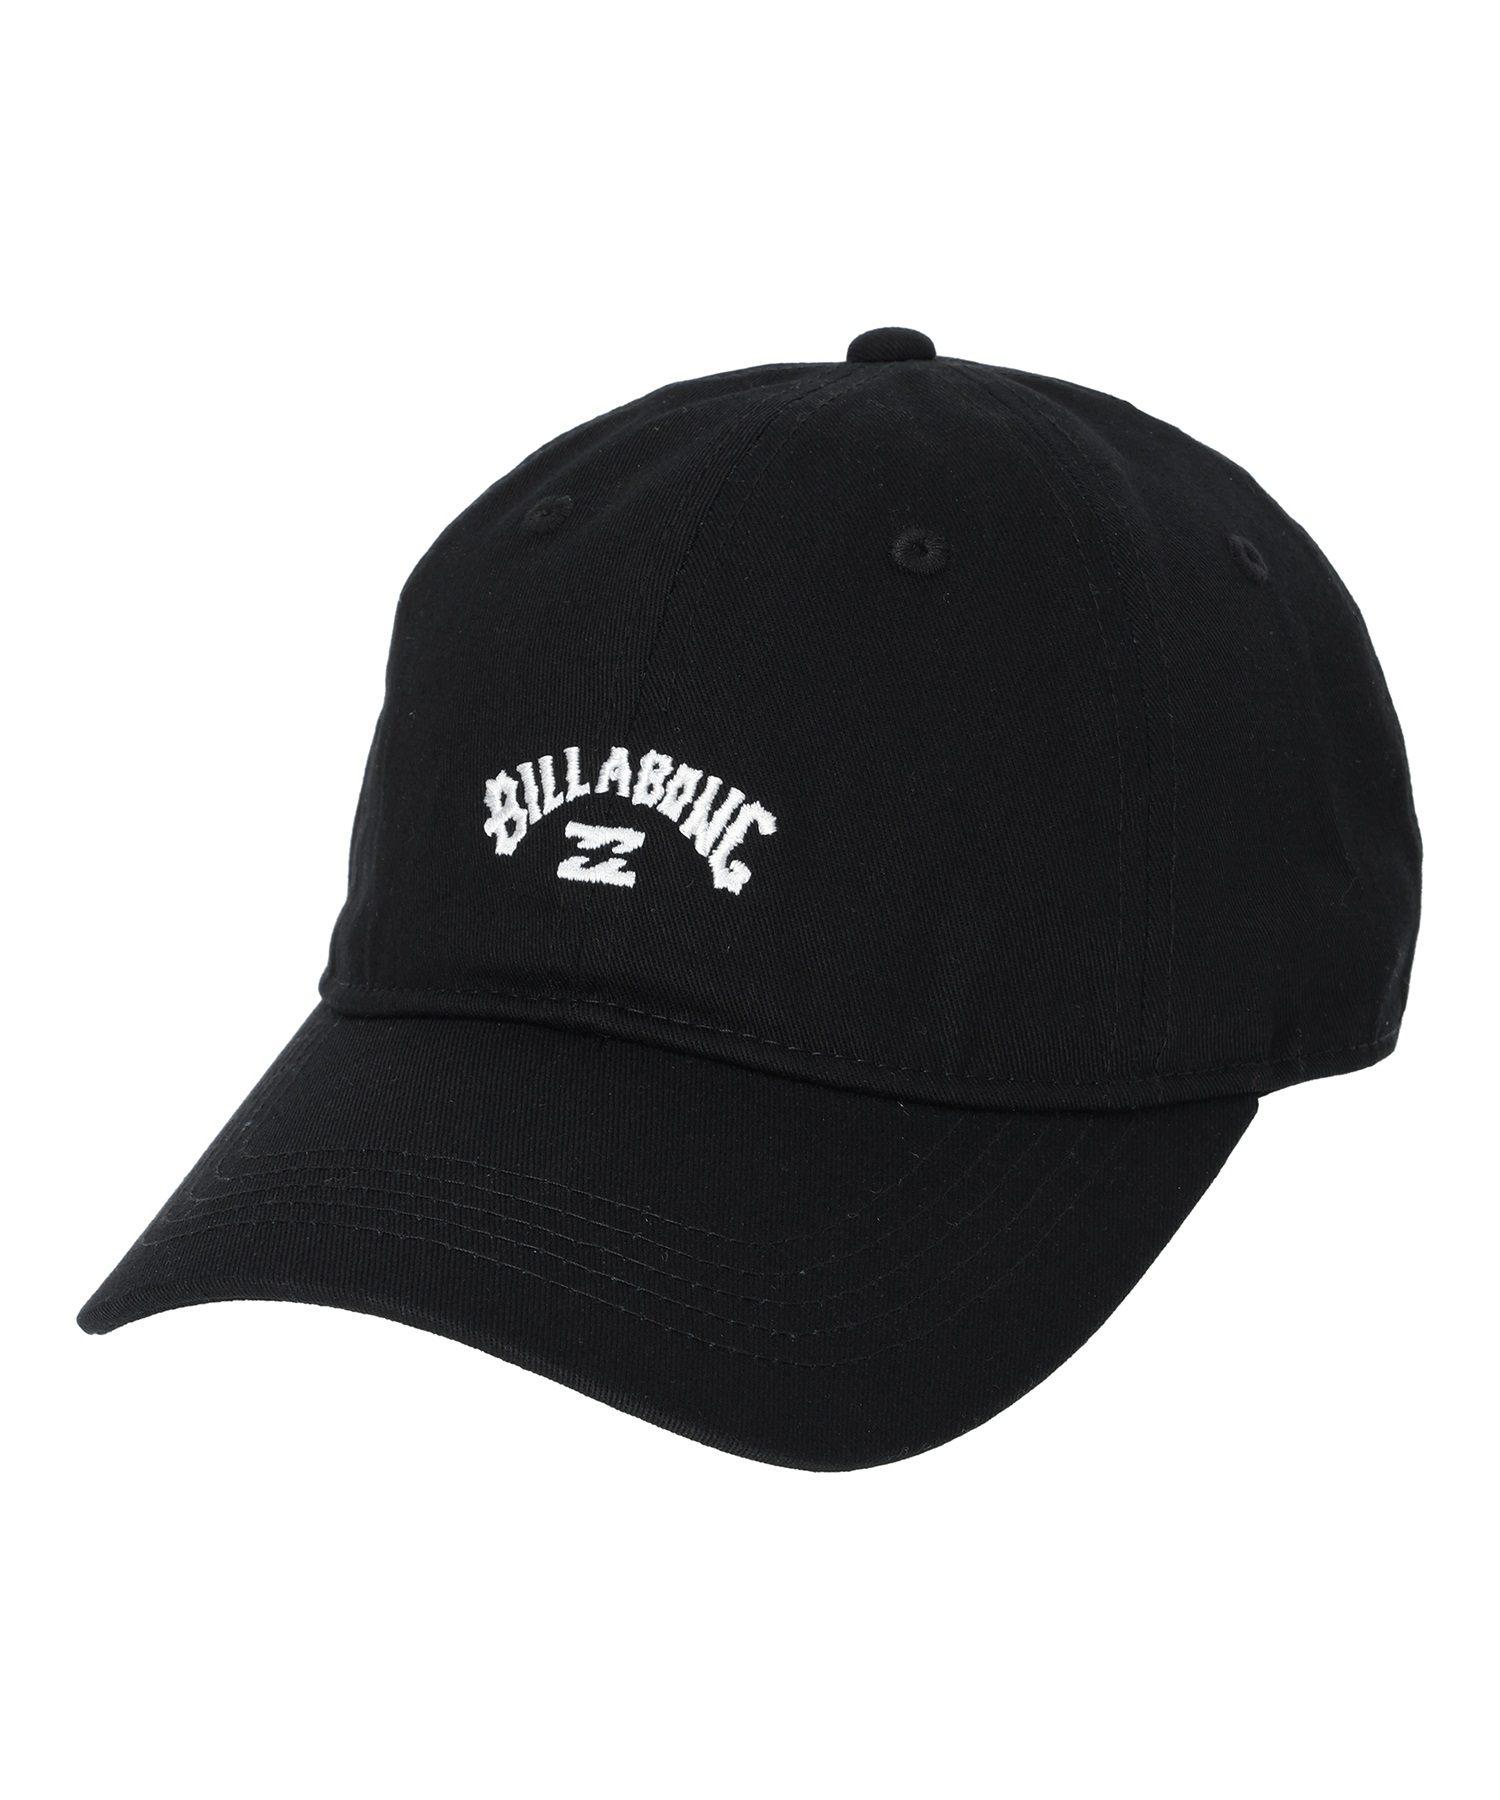 BILLABONG ビラボン CAP  BE015-991 キッズ キャップ(BEG-F)